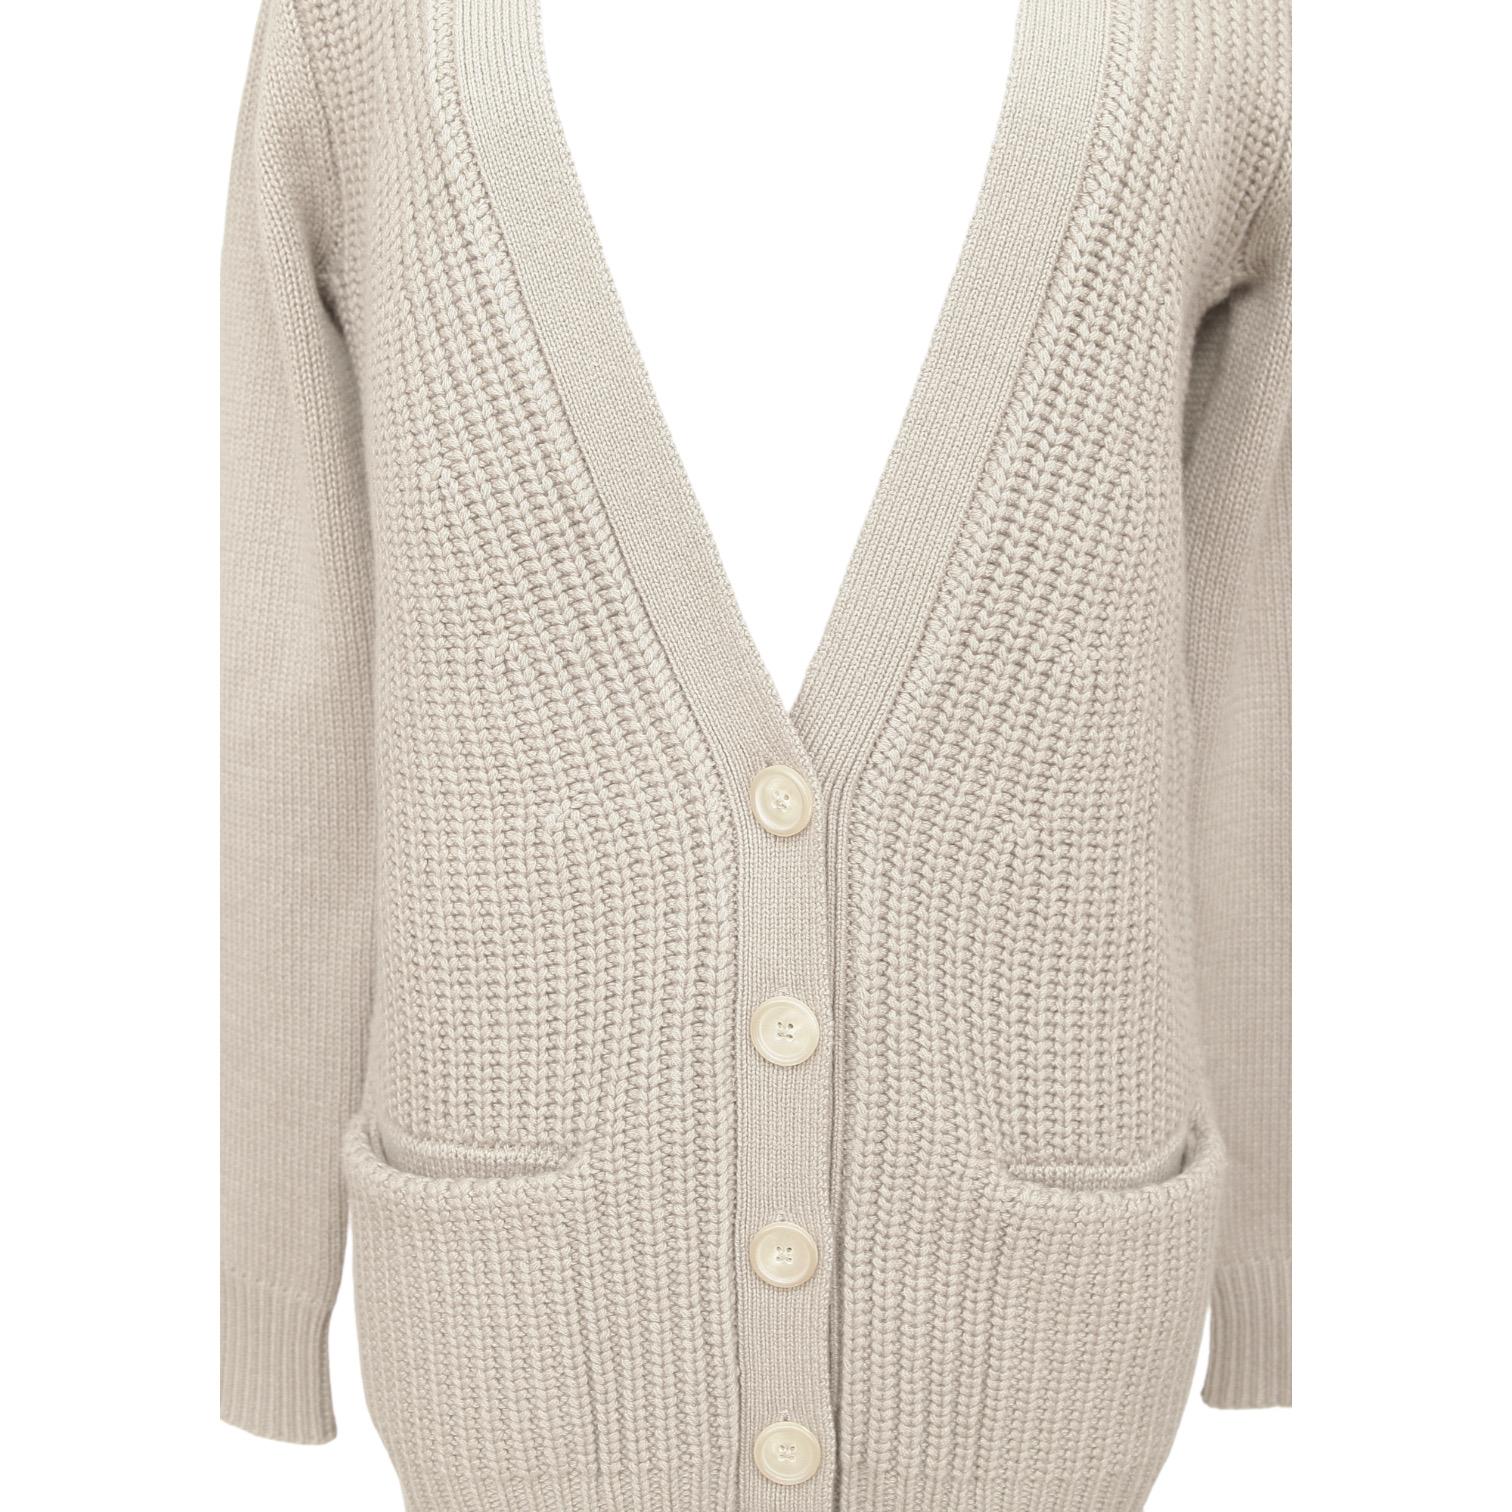 CHLOE Cardigan Sweater Long Sleeve Beige Knit Buttons Pockets Sz XS 2011 $895 For Sale 1